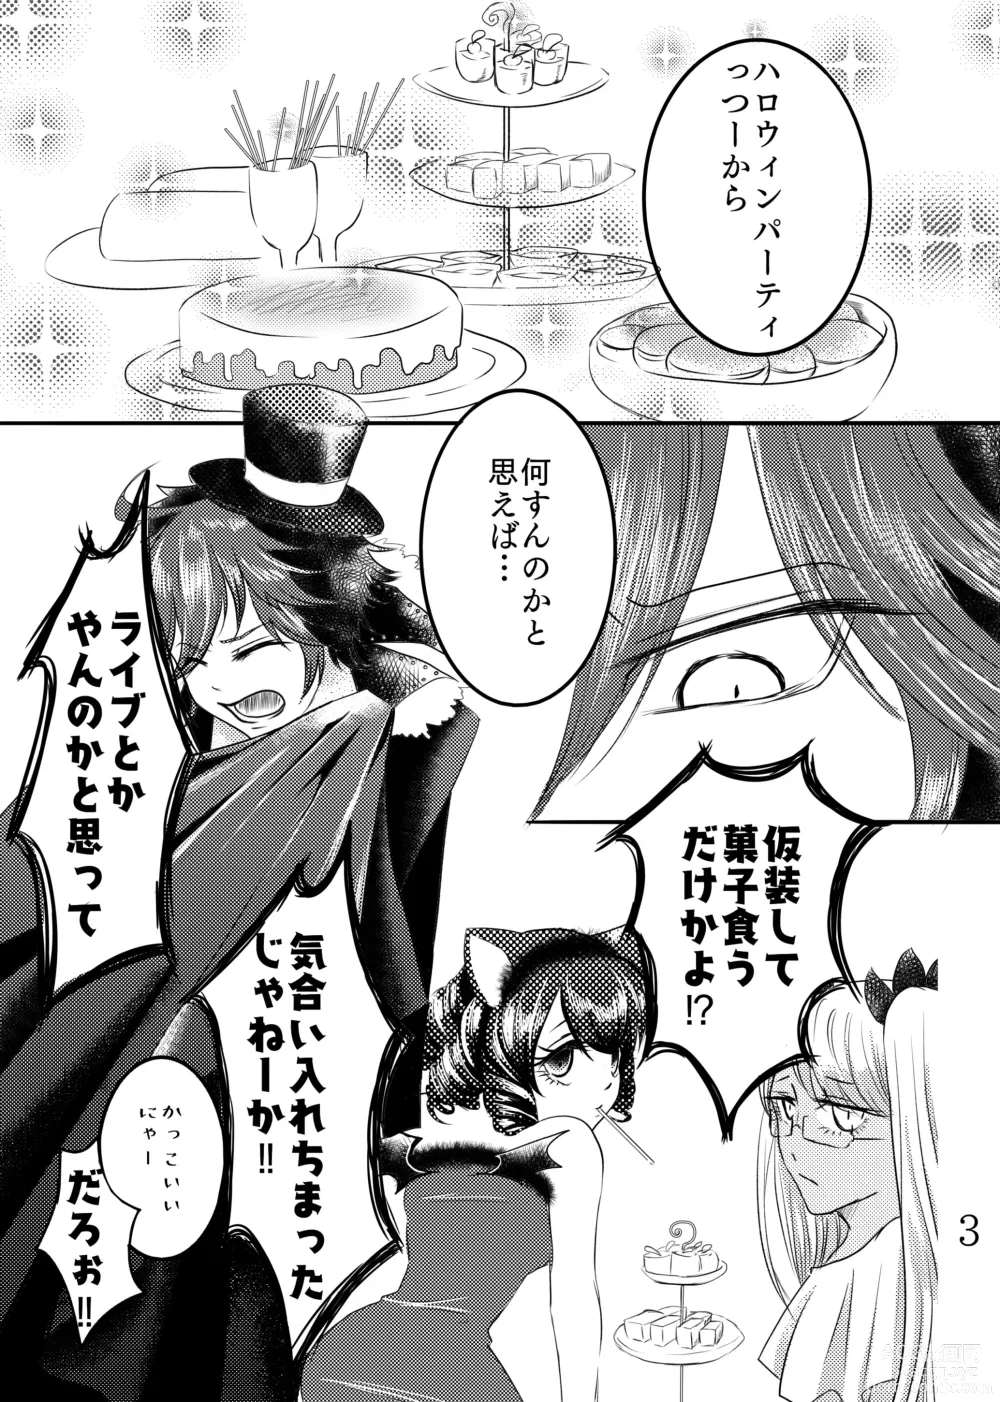 Page 2 of doujinshi ● 9/ 10 Shinkan ● sweets×sweets Sanpuru